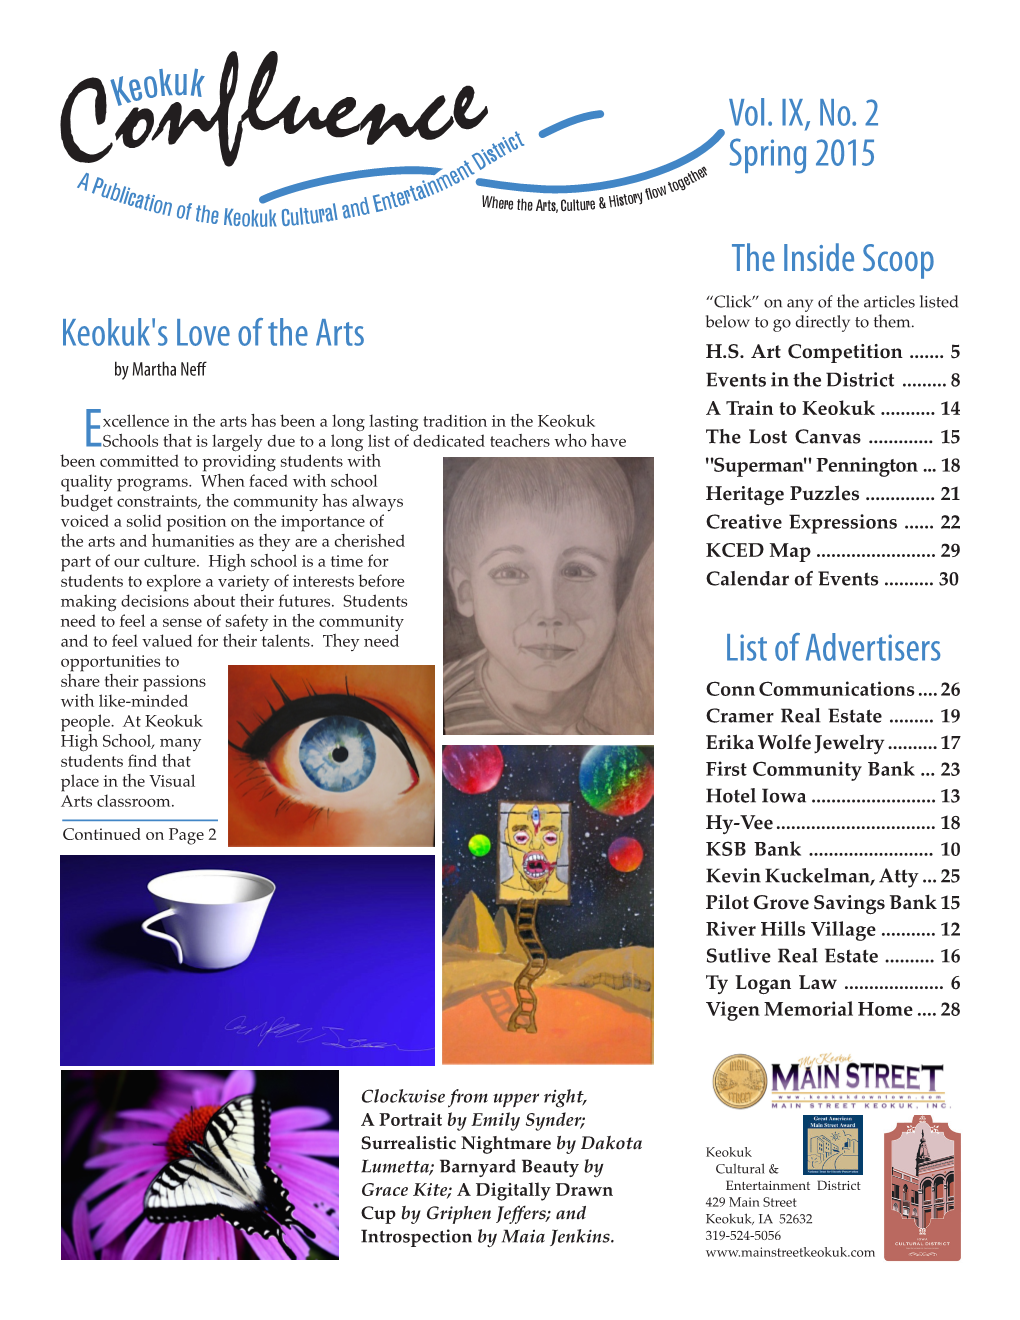 Keokuk's Love of the Arts Vol. IX, No. 2 Spring 2015 the Inside Scoop List